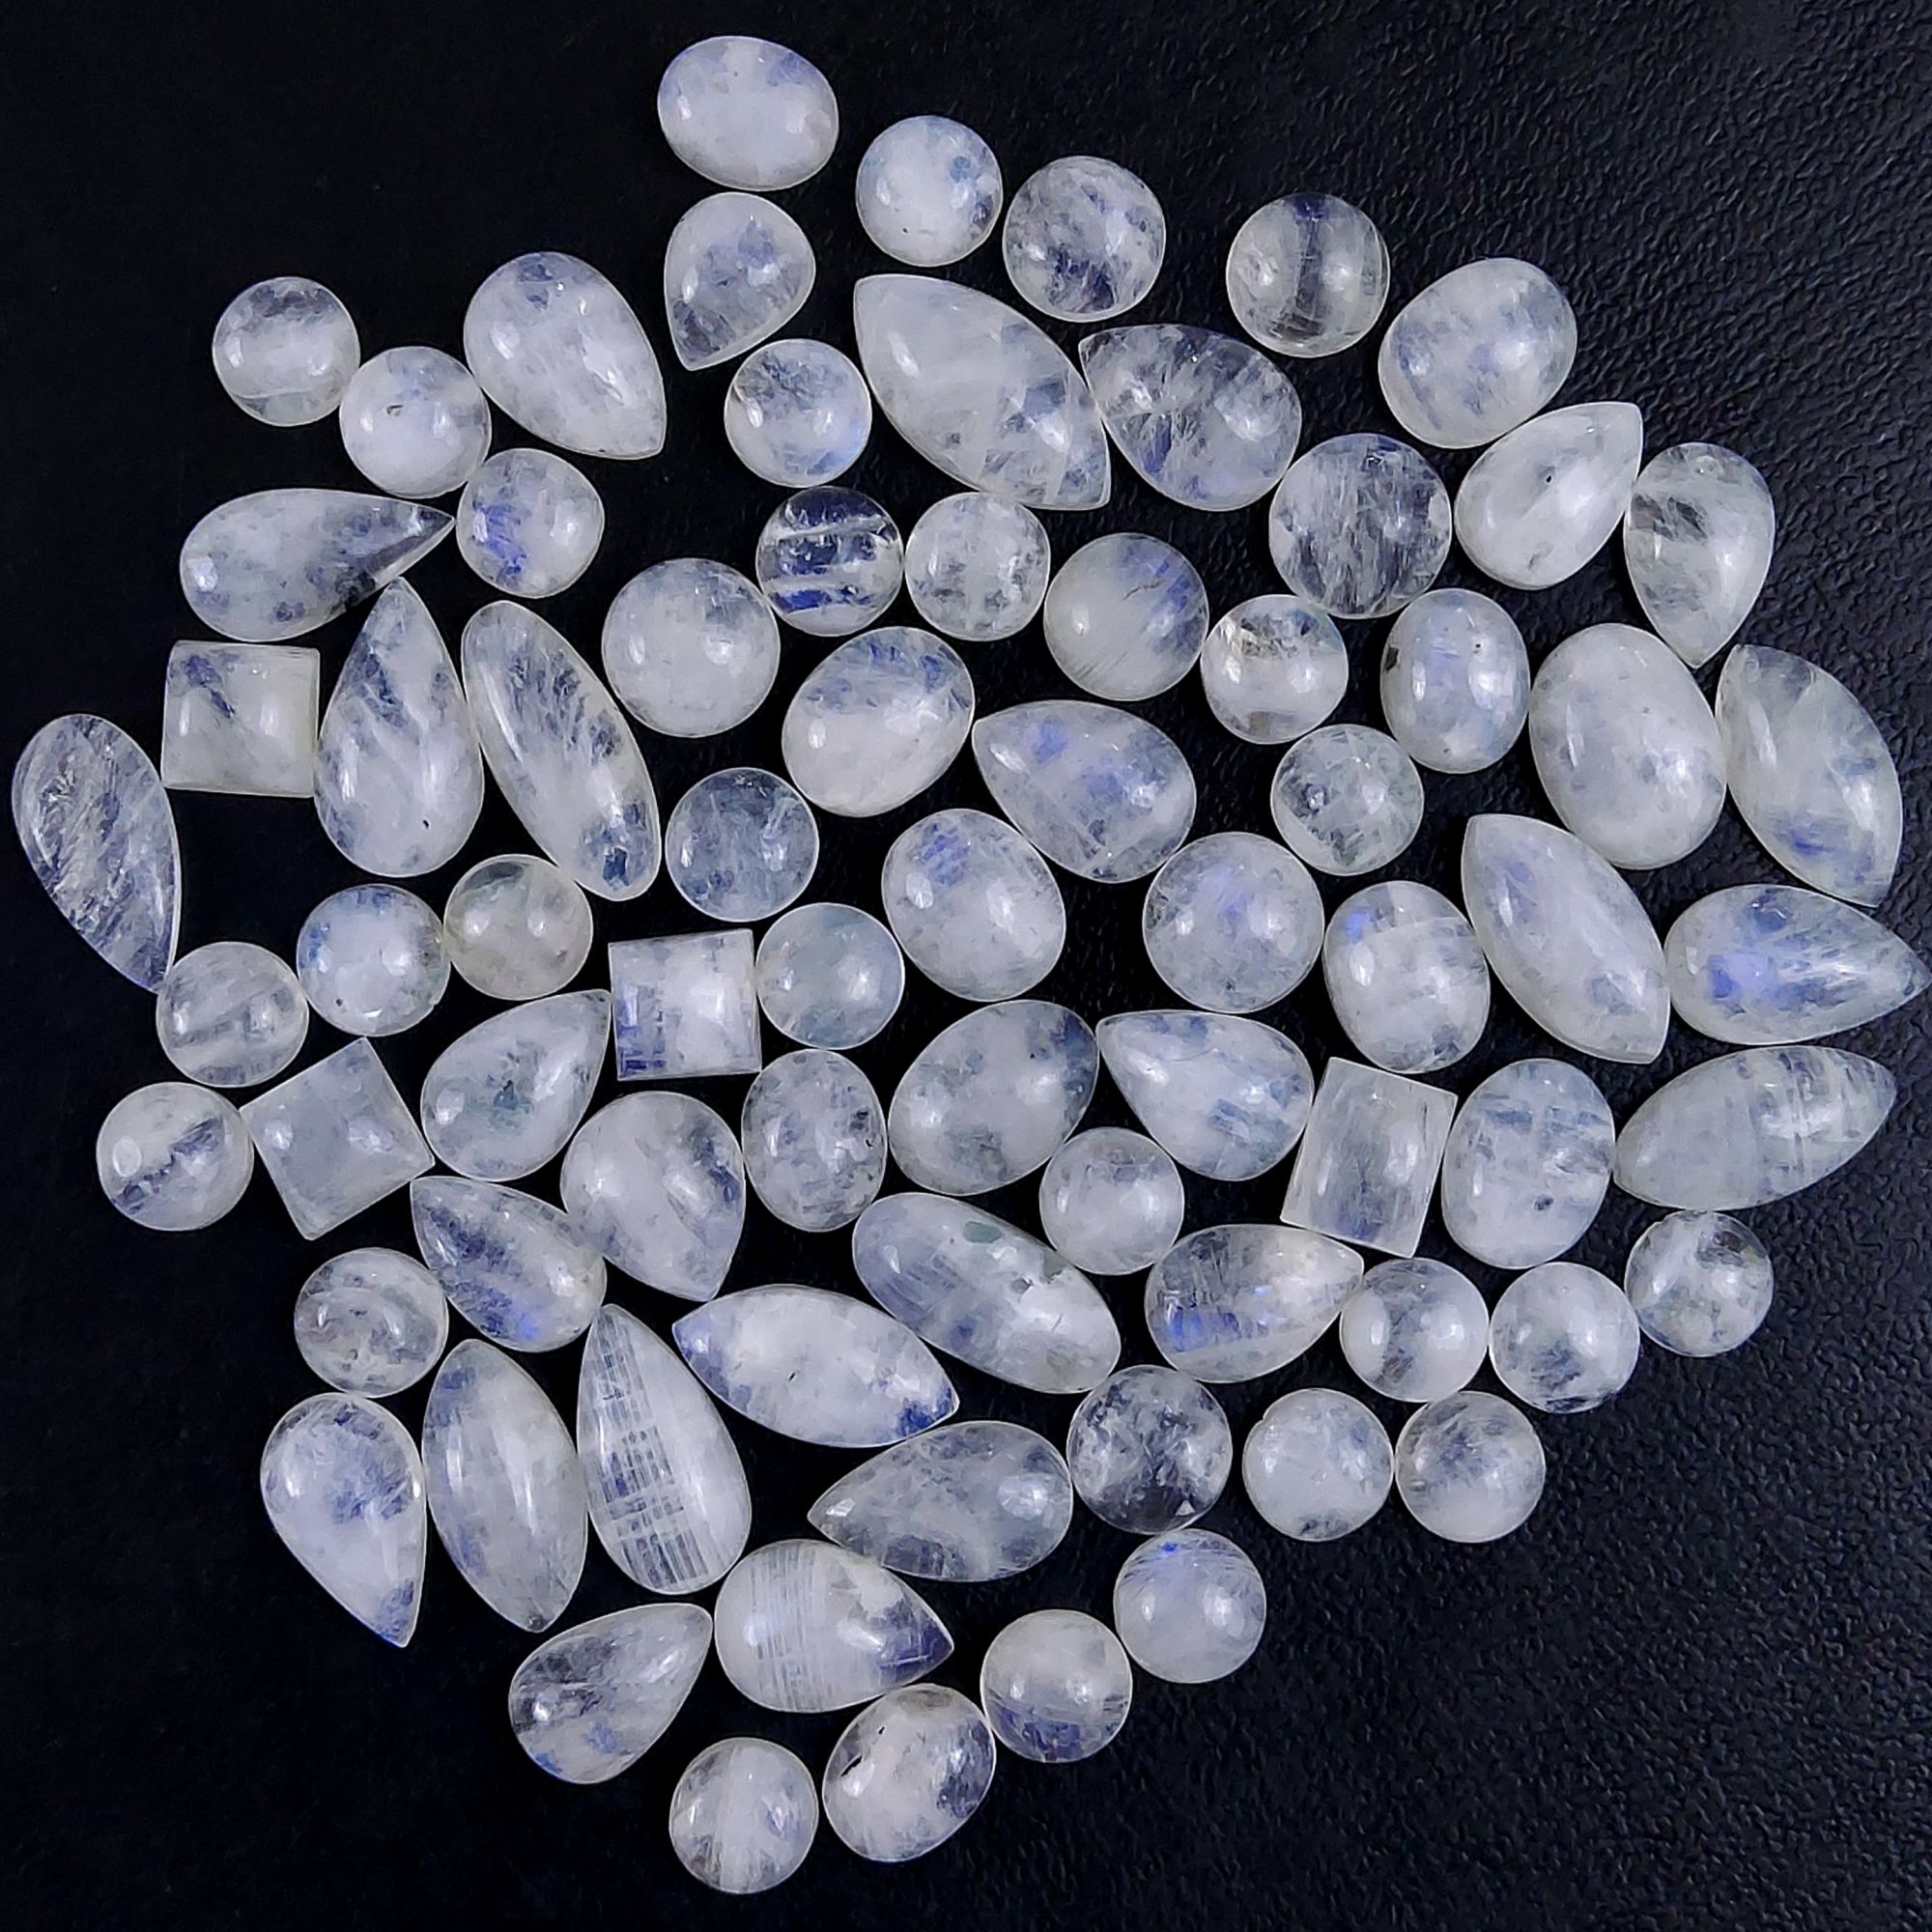 75Pcs 252Cts Natural Rainbow Cabochon Gemstone For Jewelry Making Crystal Cabochon Semi-Precious Rainbow Moonstone Flat Back Gemstone Lot 18x8 8x8mm#722